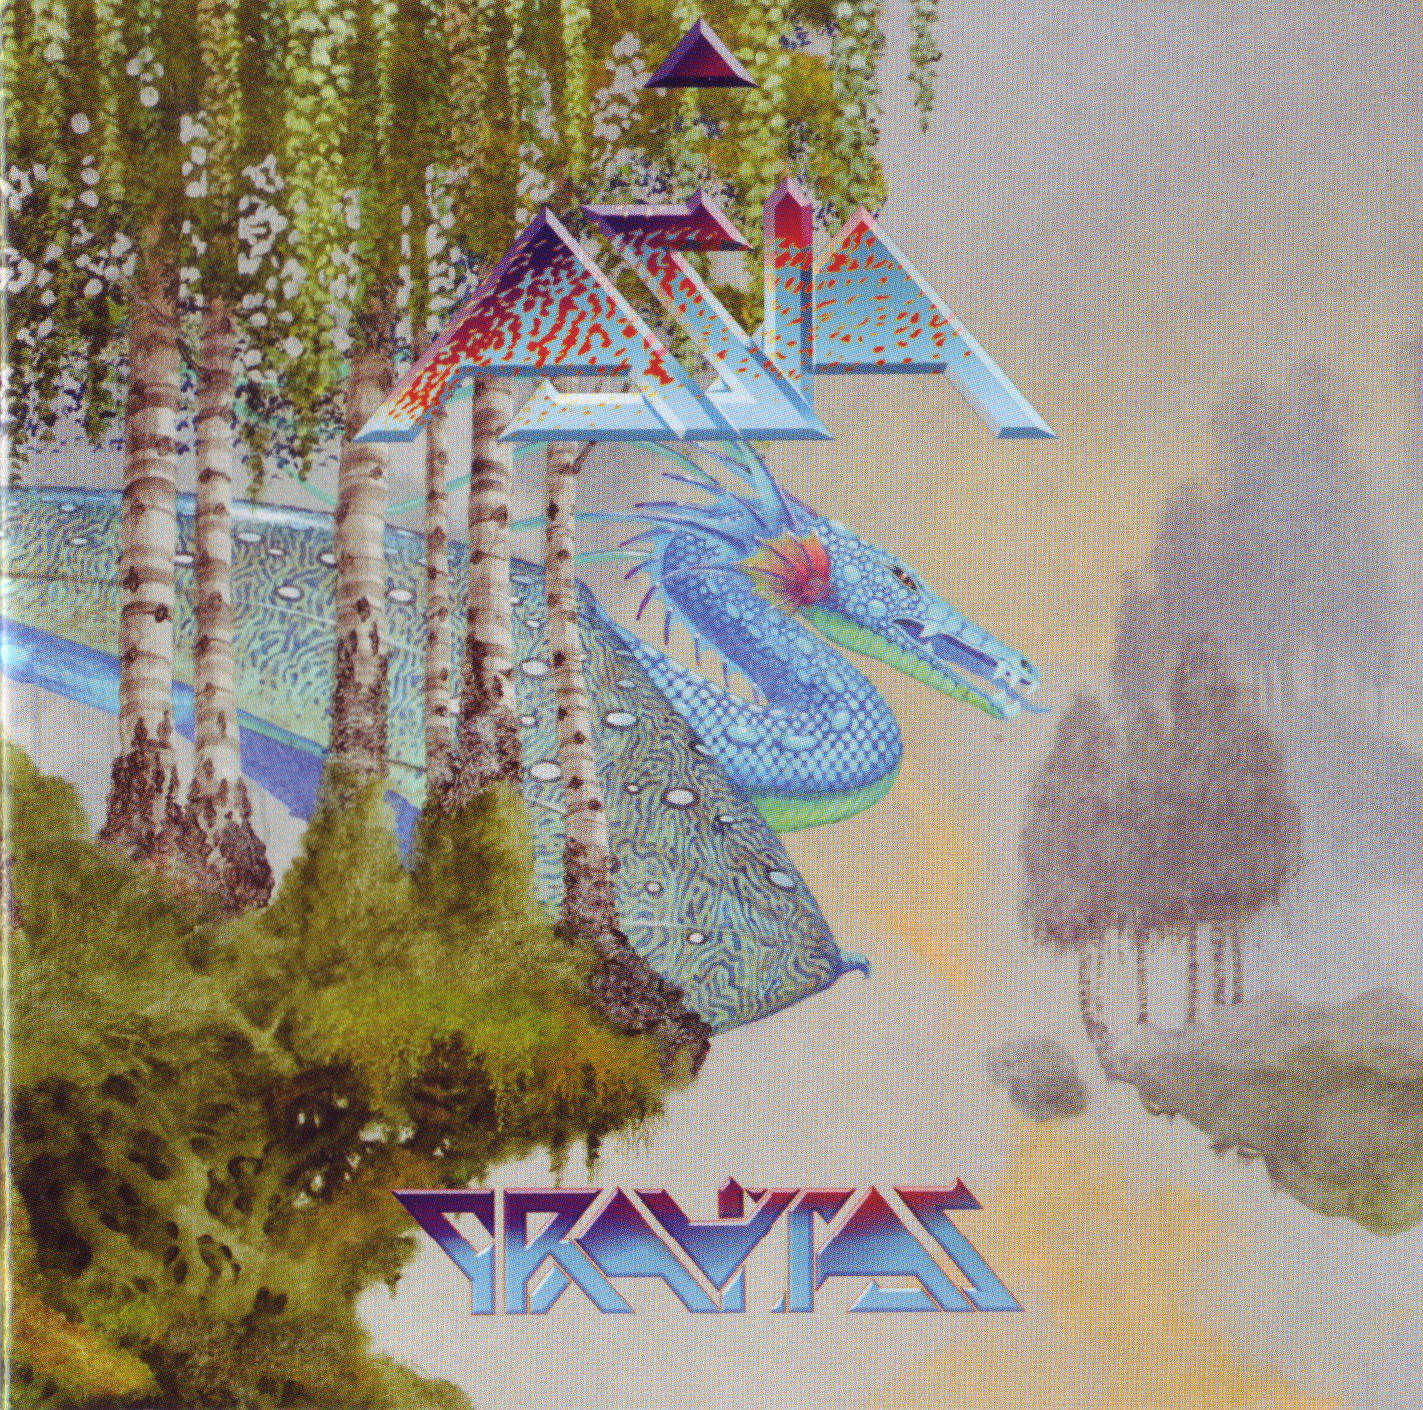 Release “Gravitas” by Asia - MusicBrainz